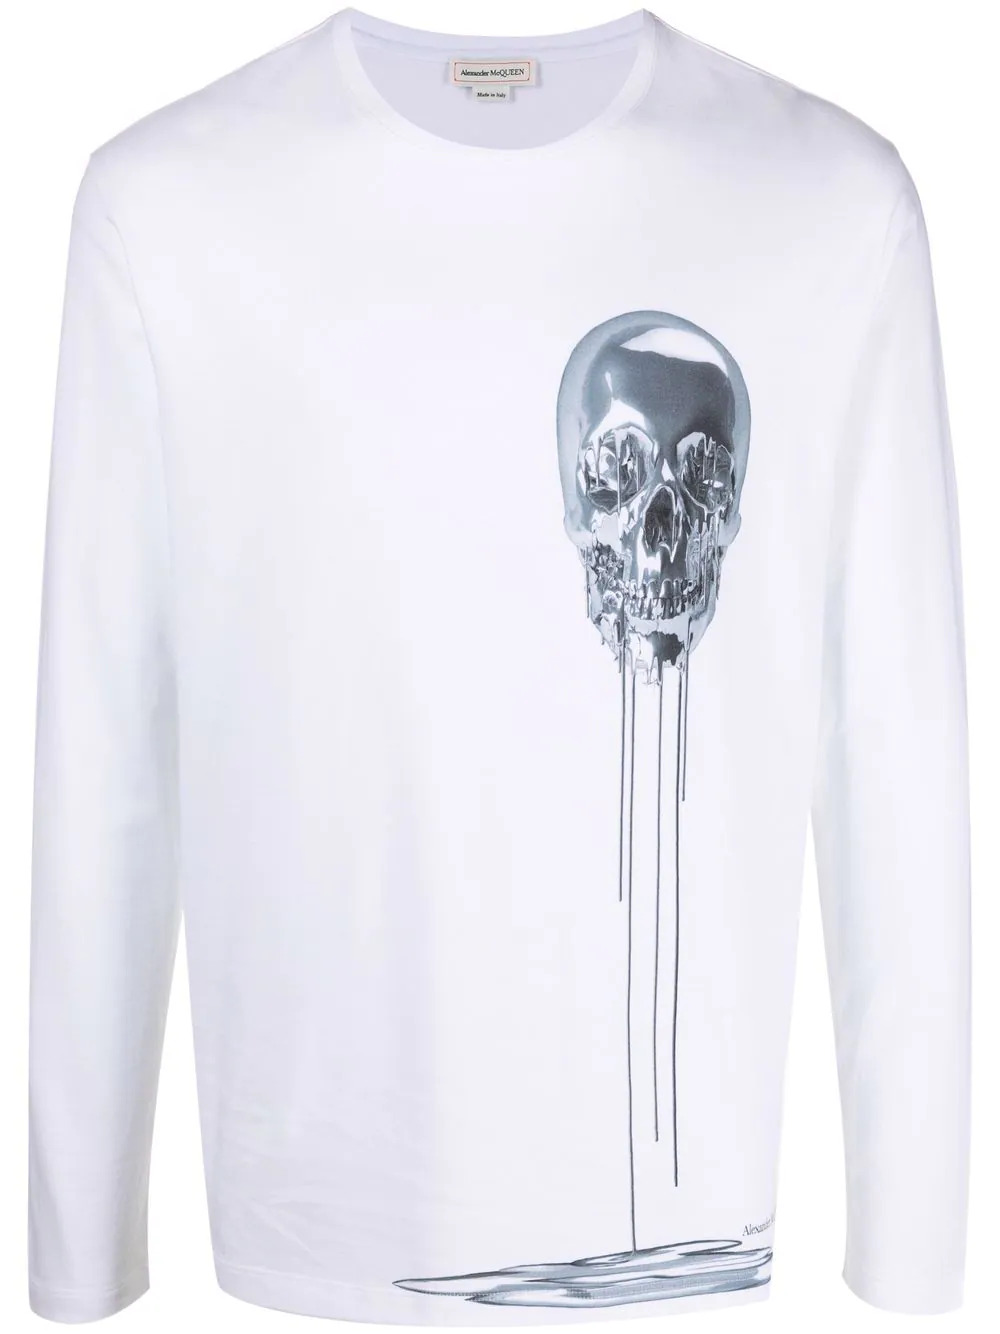 Langarm-Shirt mit Totenkopf in Weiß